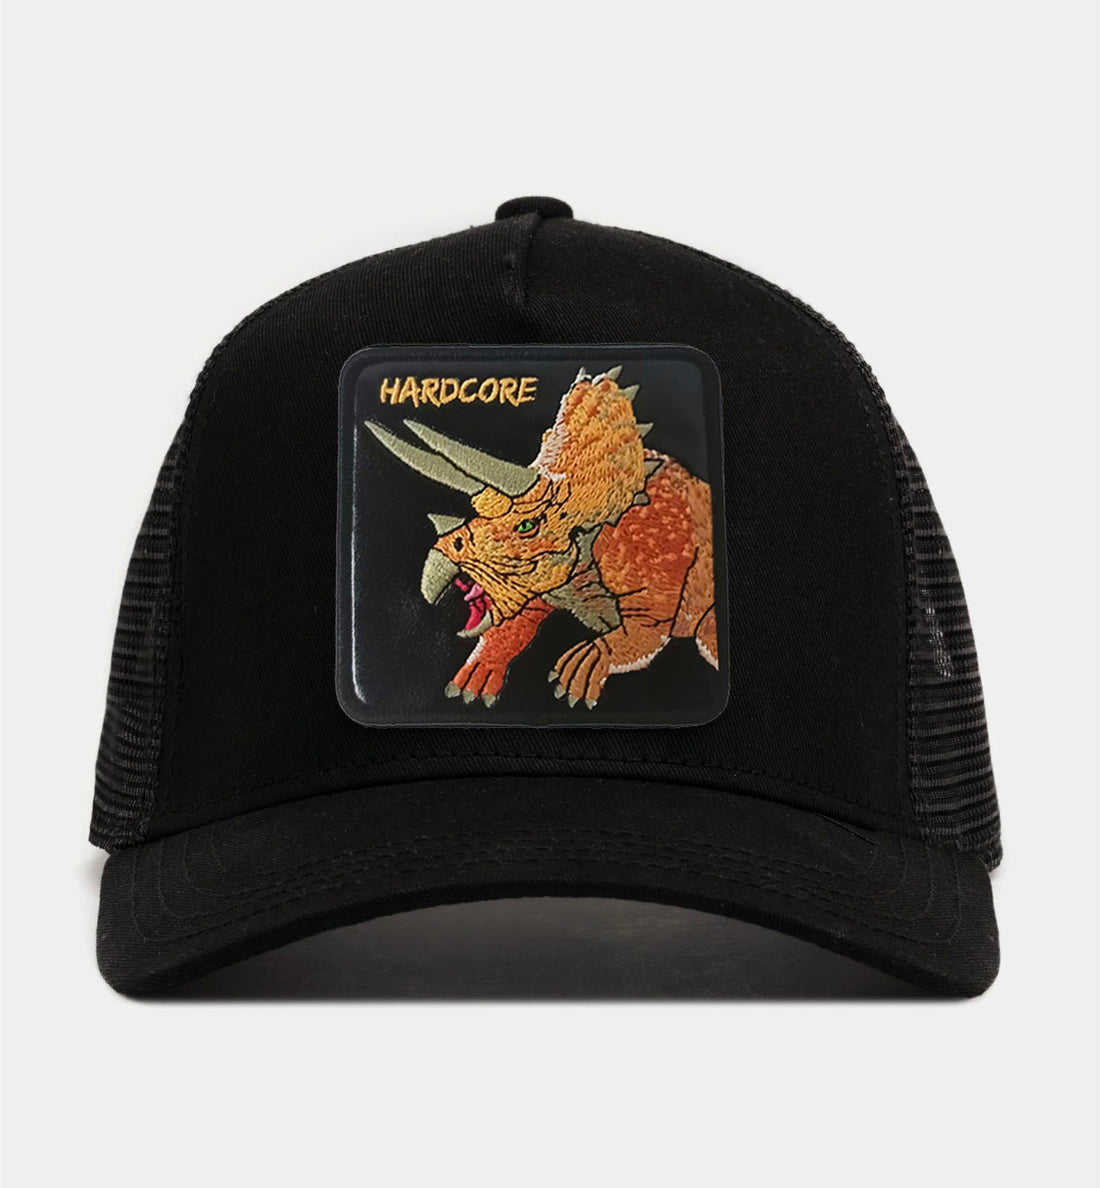 Triceratops - "Hardcore" Trucker Hat